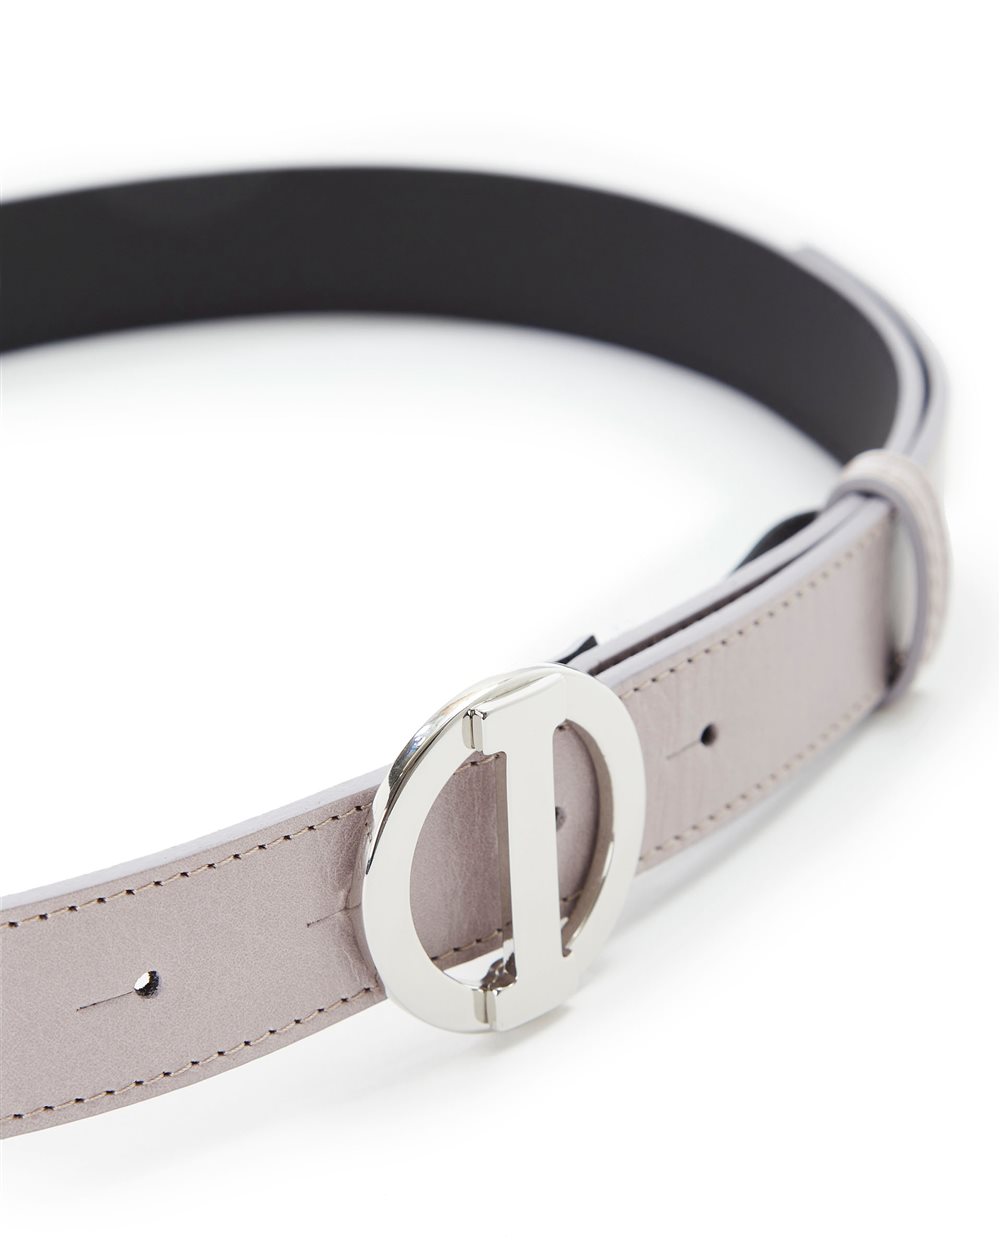 Leather belt with logo - Iceberg - Official Website